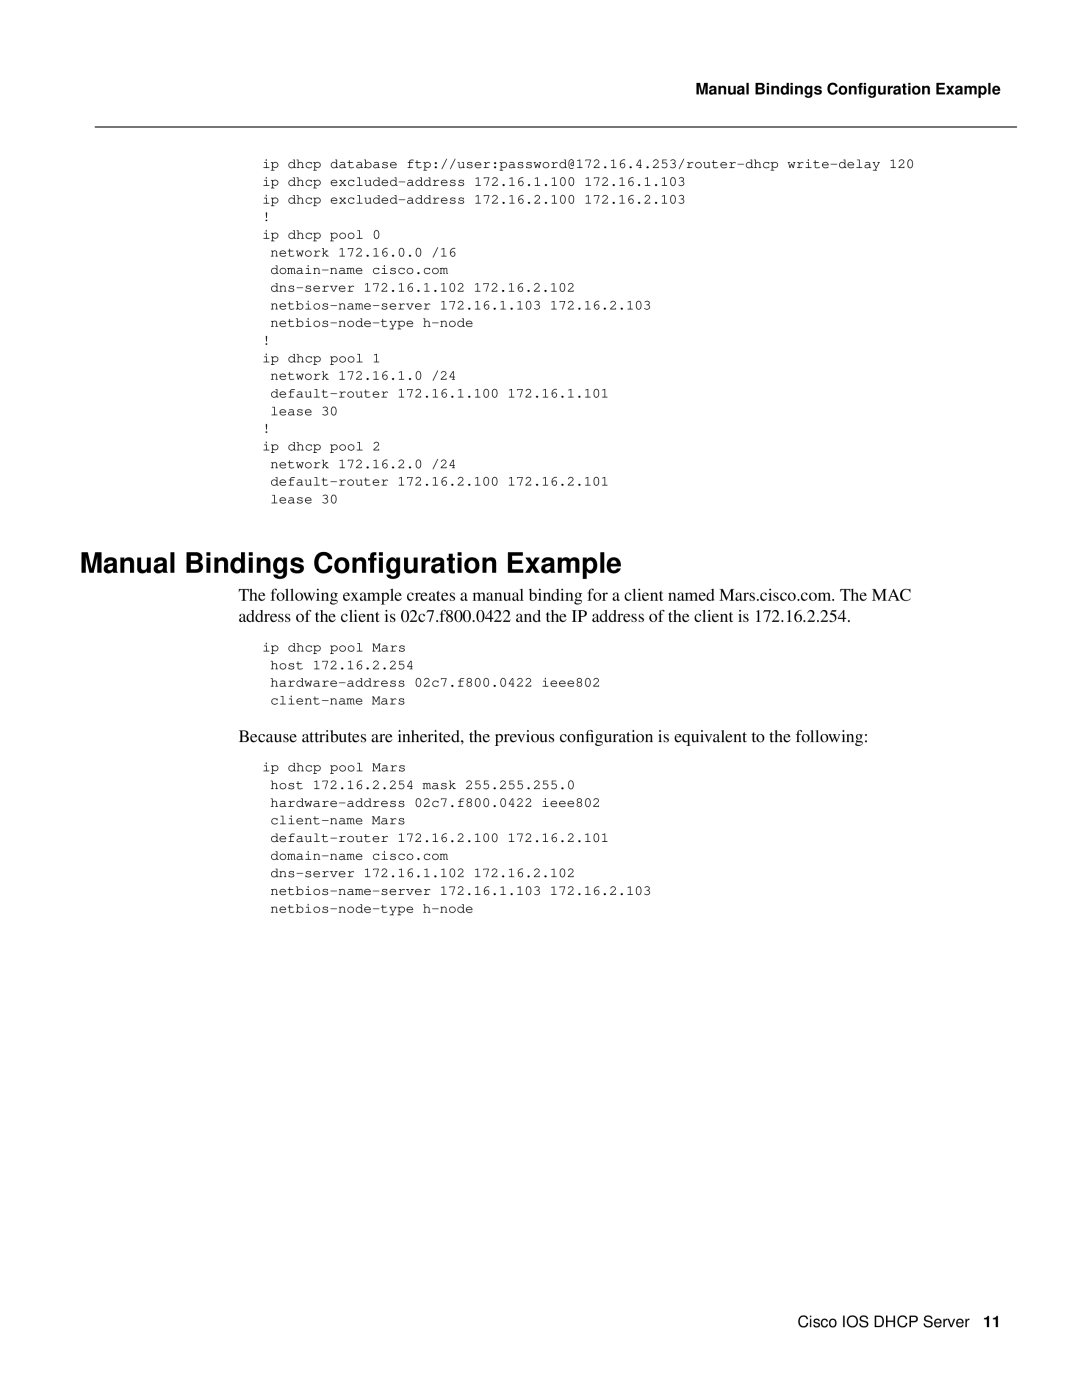 Cisco Systems 32369 manual Manual Bindings Conﬁguration Example, Manual Bindings Configuration Example 